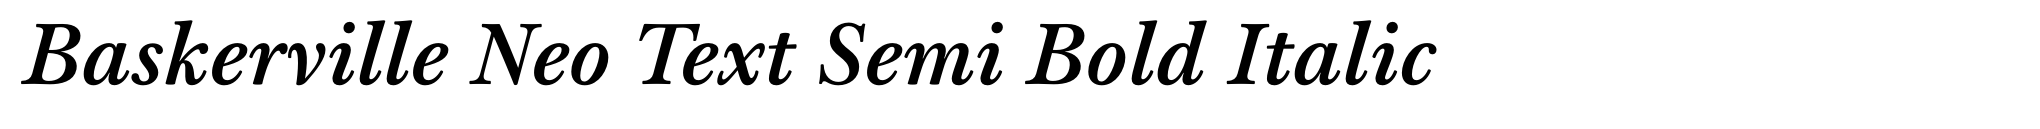 Baskerville Neo Text Semi Bold Italic image